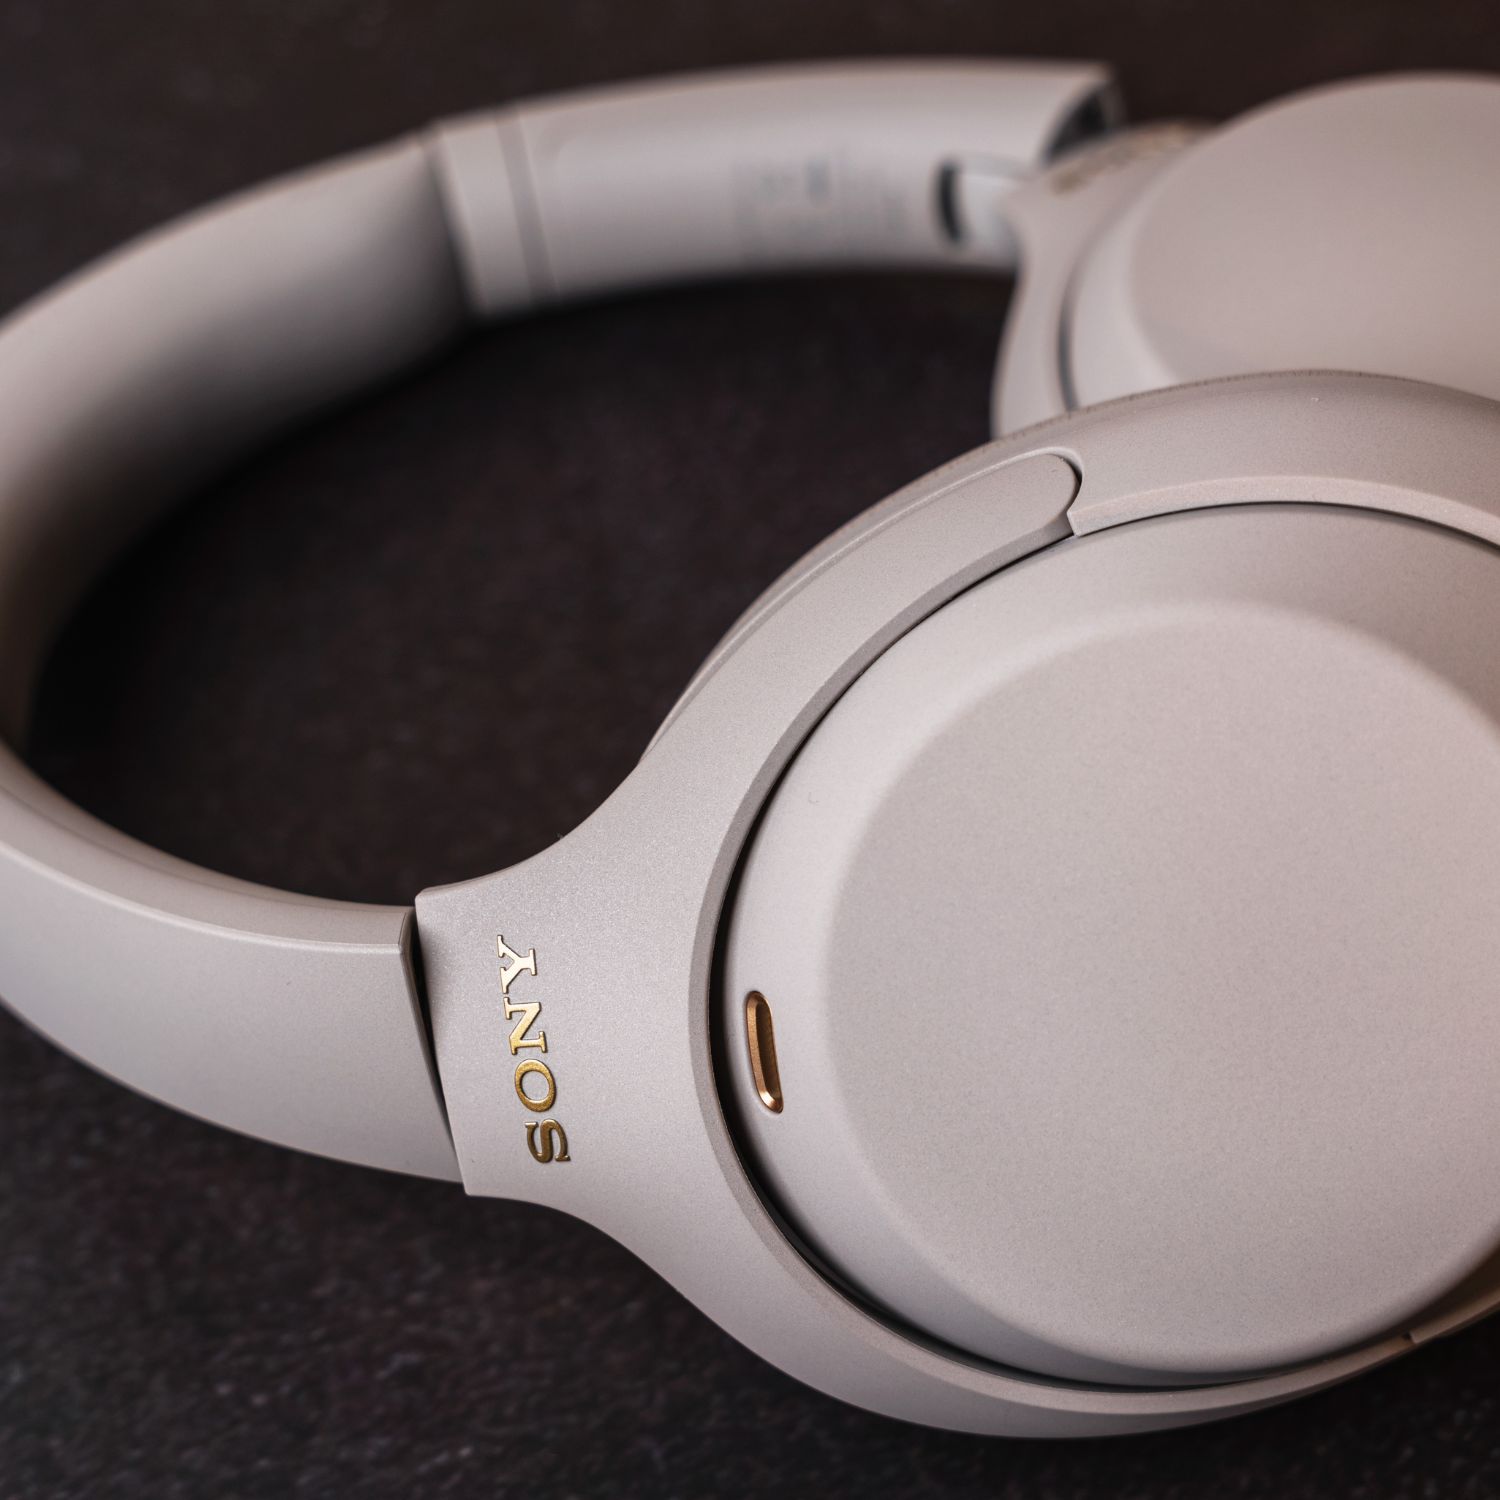 Le casque audio antibruit Sony garantit une qualité sonore optimale © shutterstock